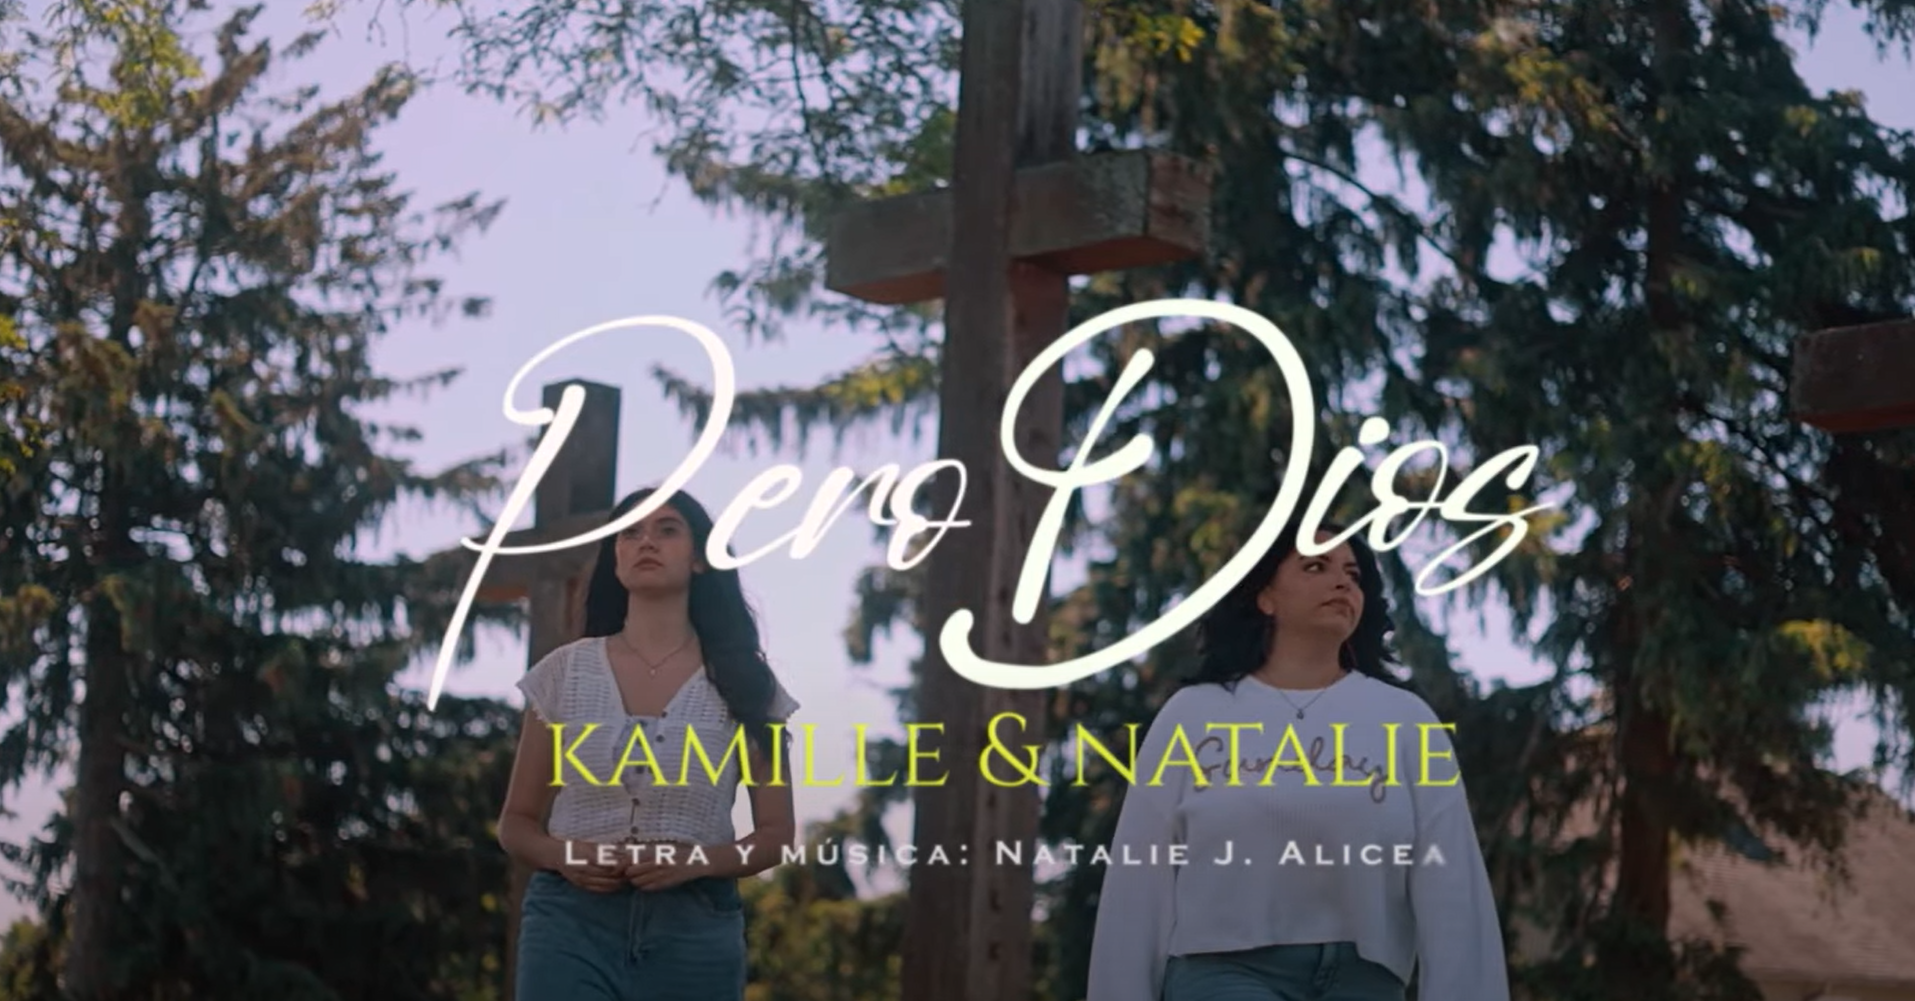 Kamille & Natalie nos presentan su primer sencillo musical